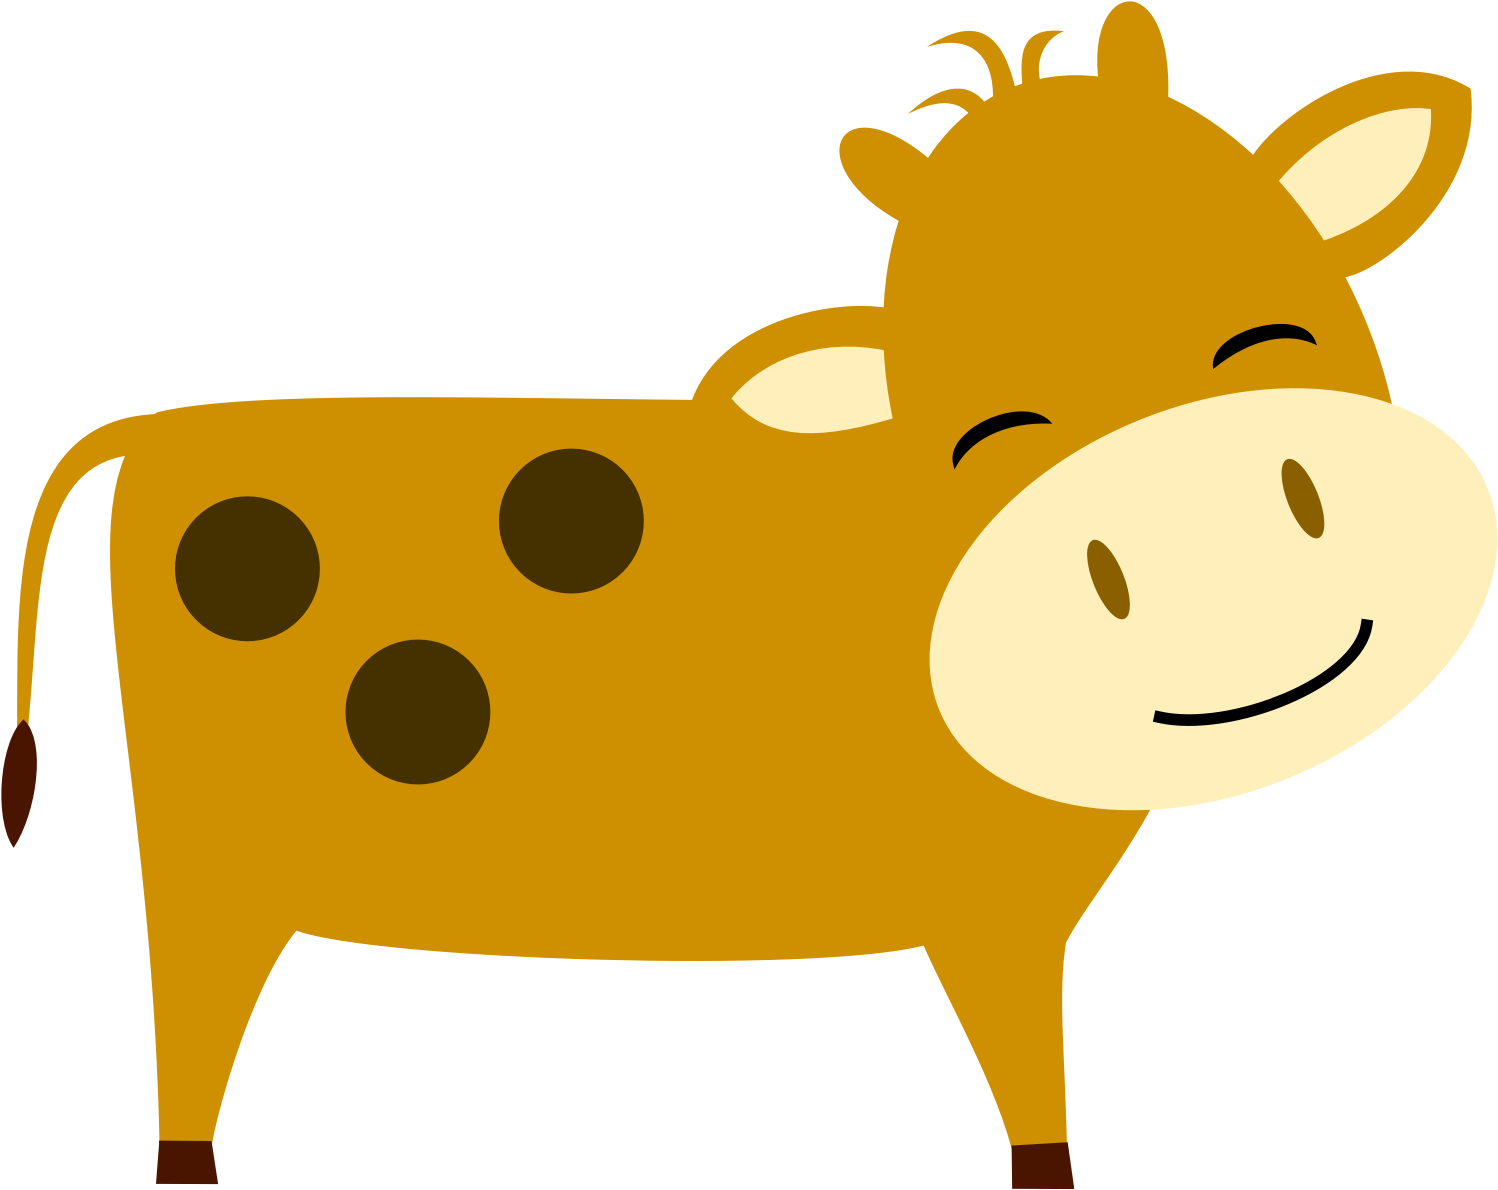 Felting - Funny Cow Tote Bag (1512x1204)